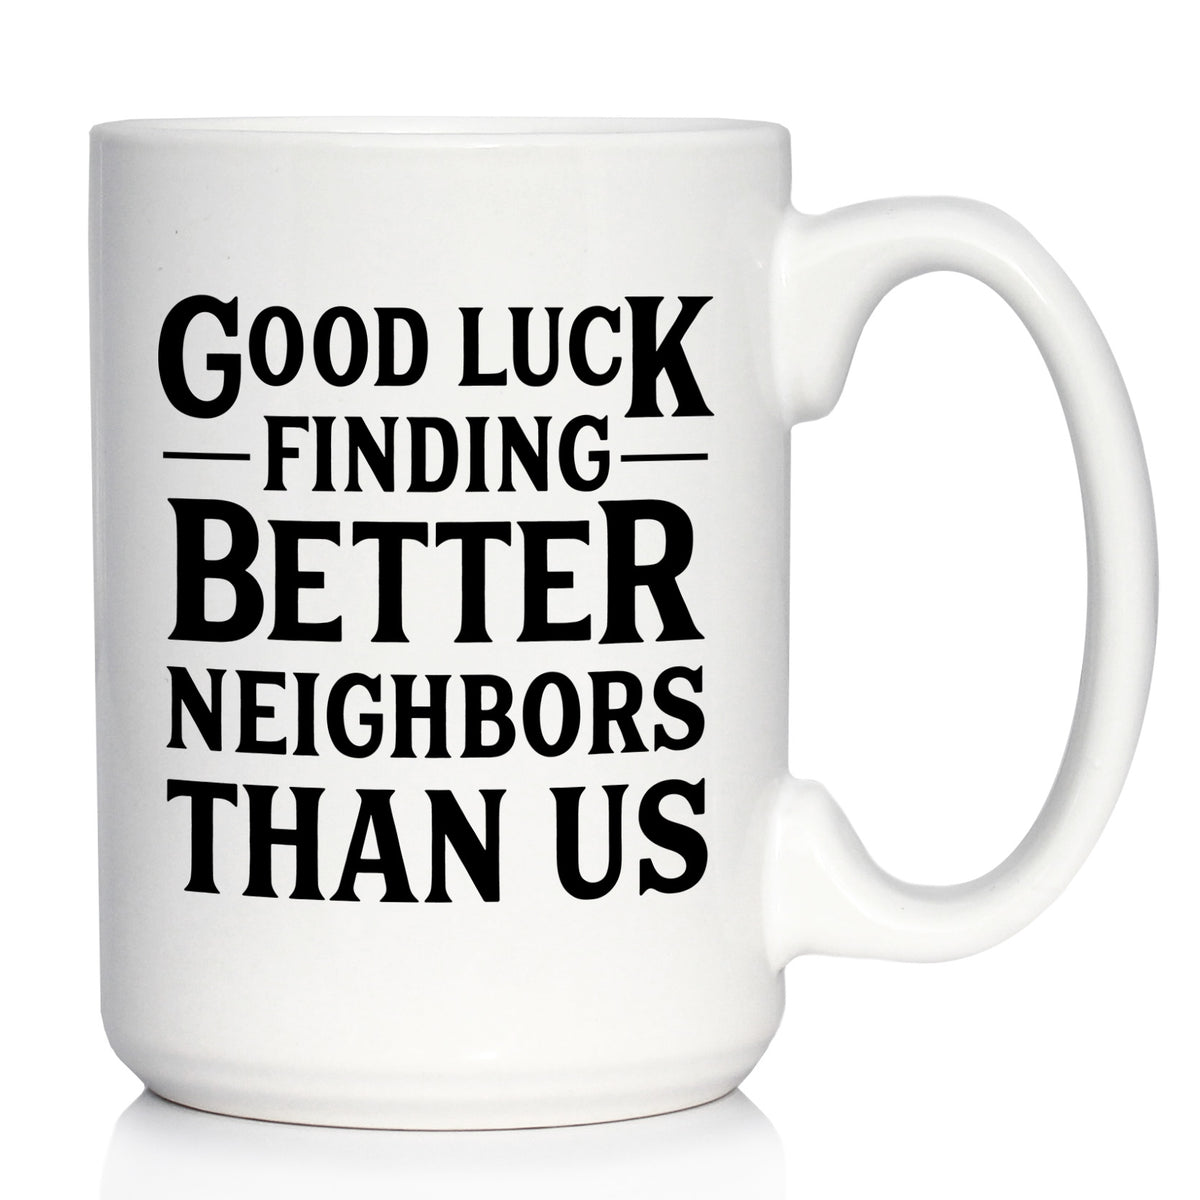 Good Luck Finding Better Neighbors Than Us - Funny Coffee Mug Gifts for Neighbors Moving Away